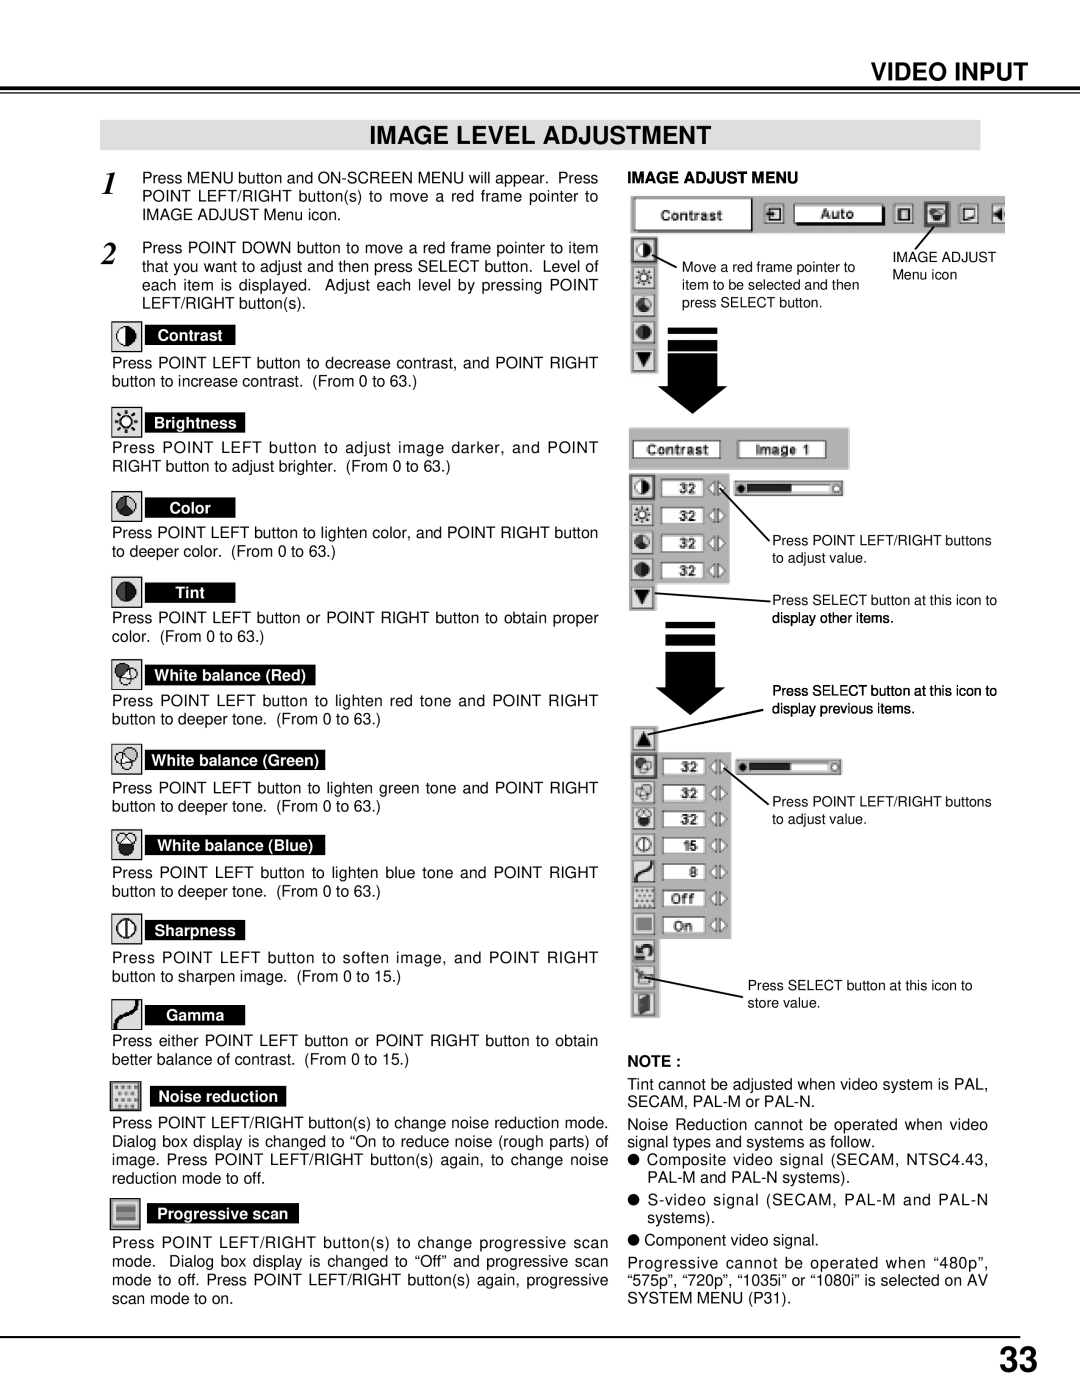 Eiki LC-X1000 instruction manual Video Input Image Level Adjustment, Image Adjust Menu 